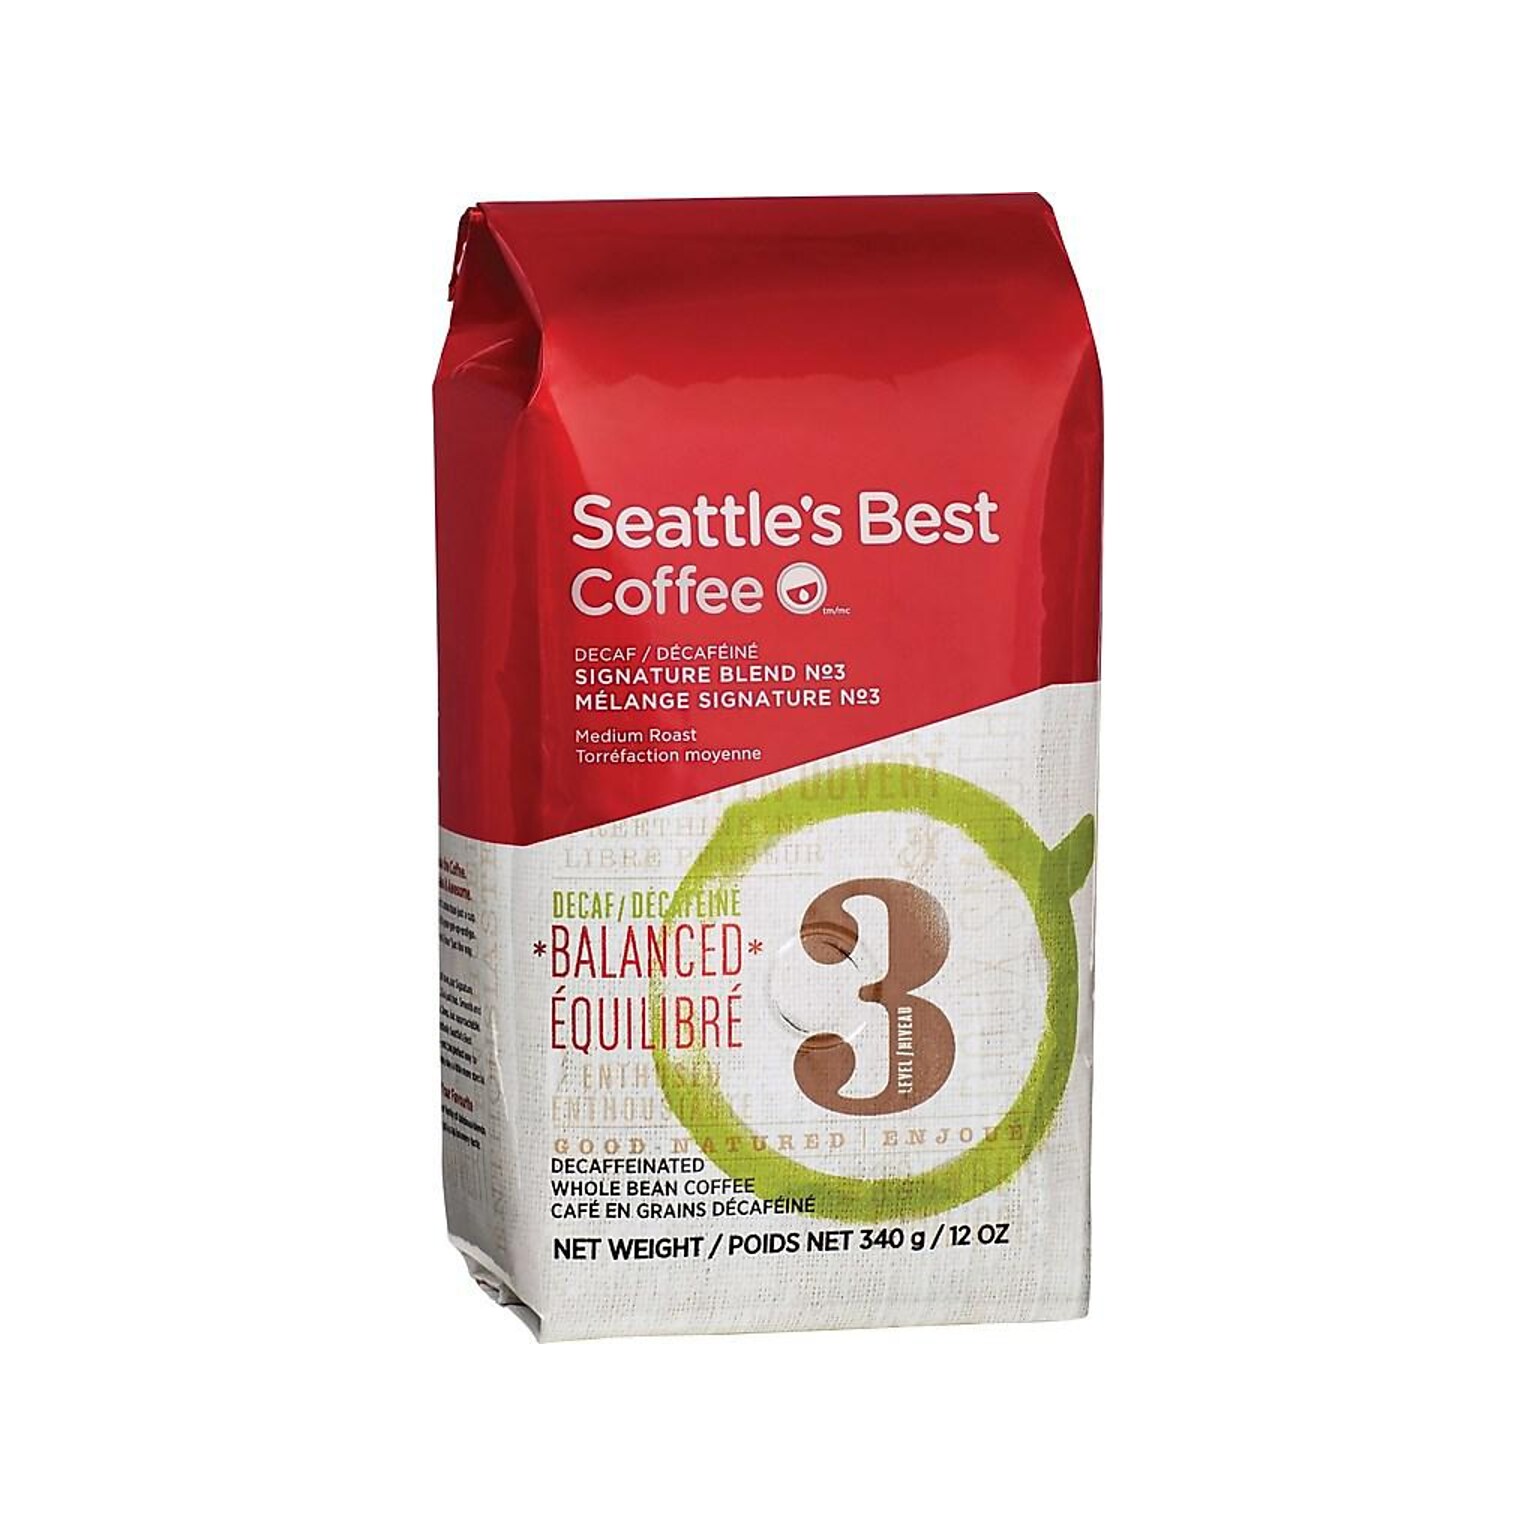 Seattles Best Coffee Signature Blend No.3 Decaf Whole Bean Coffee, Medium Roast, 12 oz. (11008565)